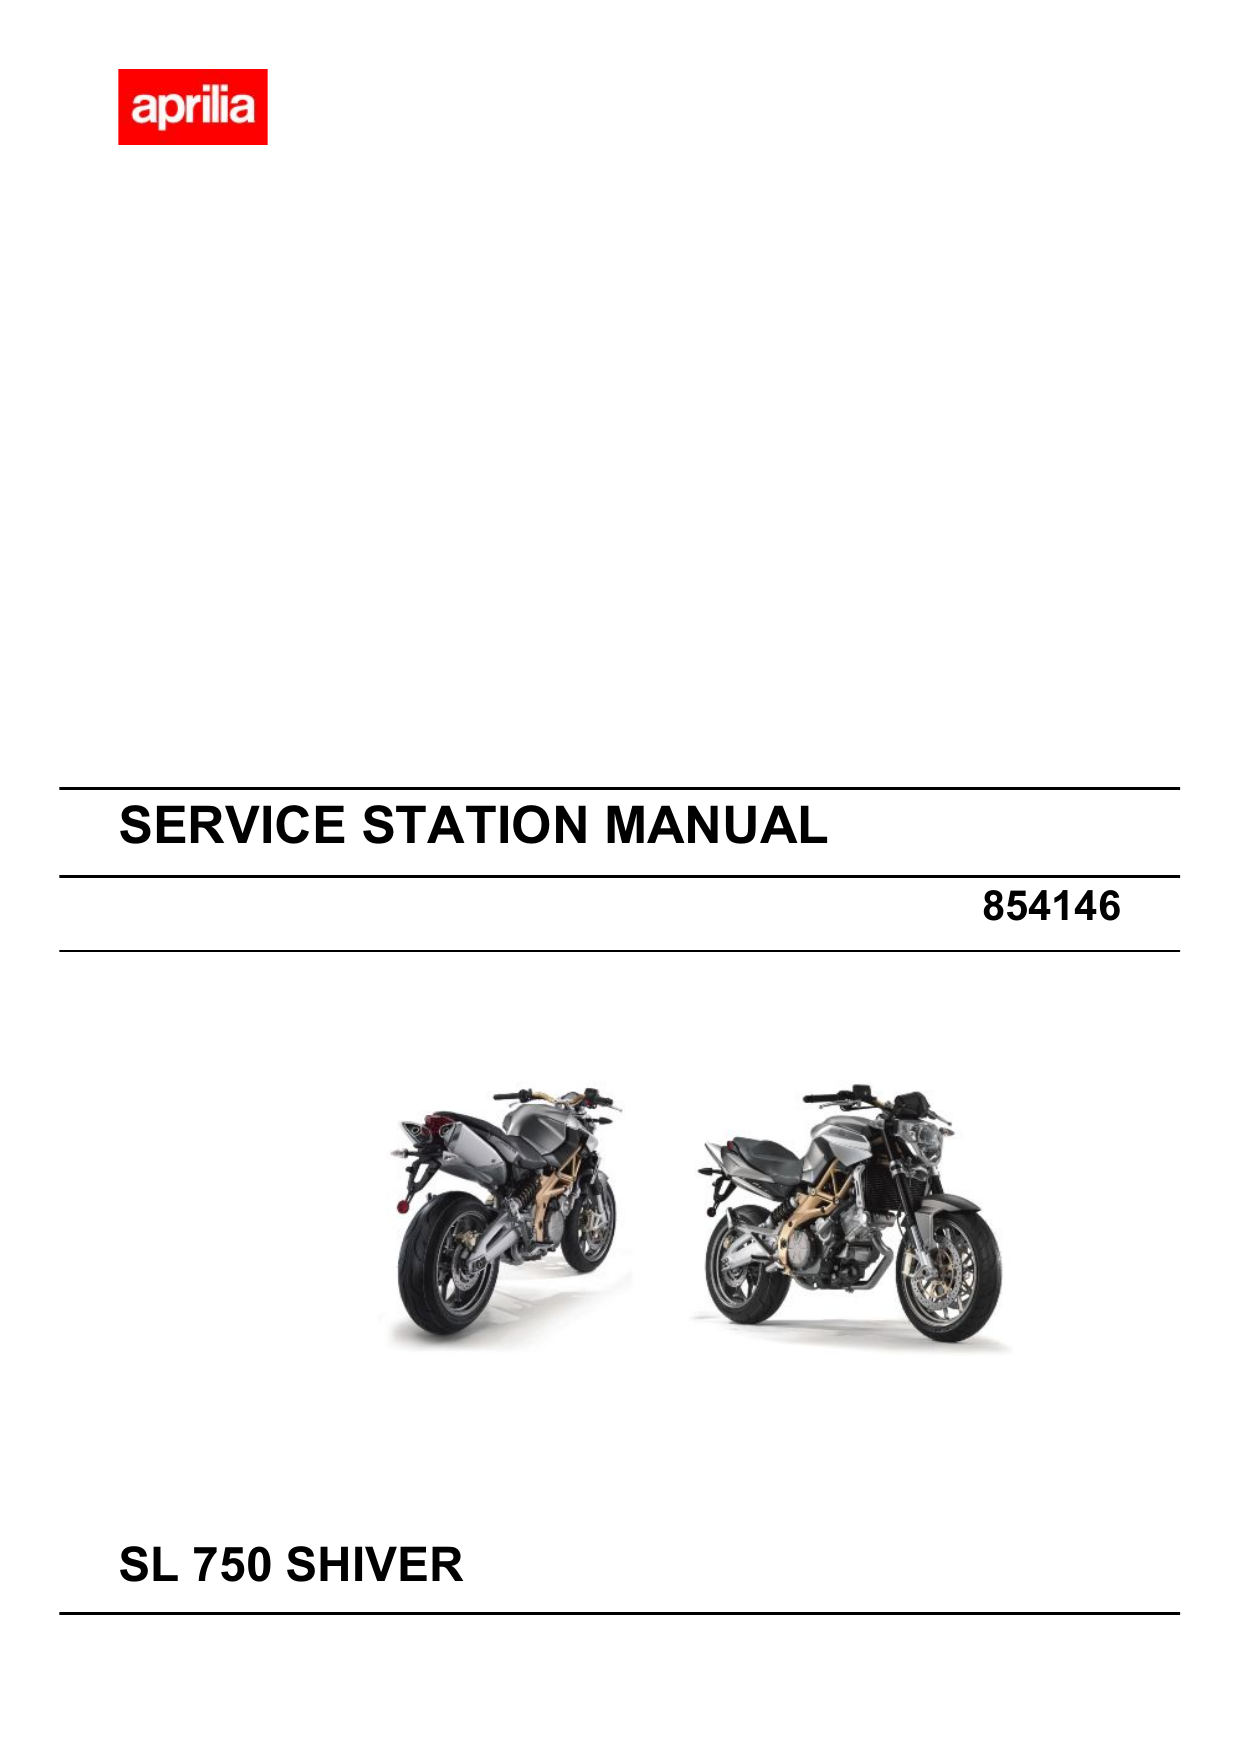 Aprilia SL 750 Shiver service station manual Preview image 1